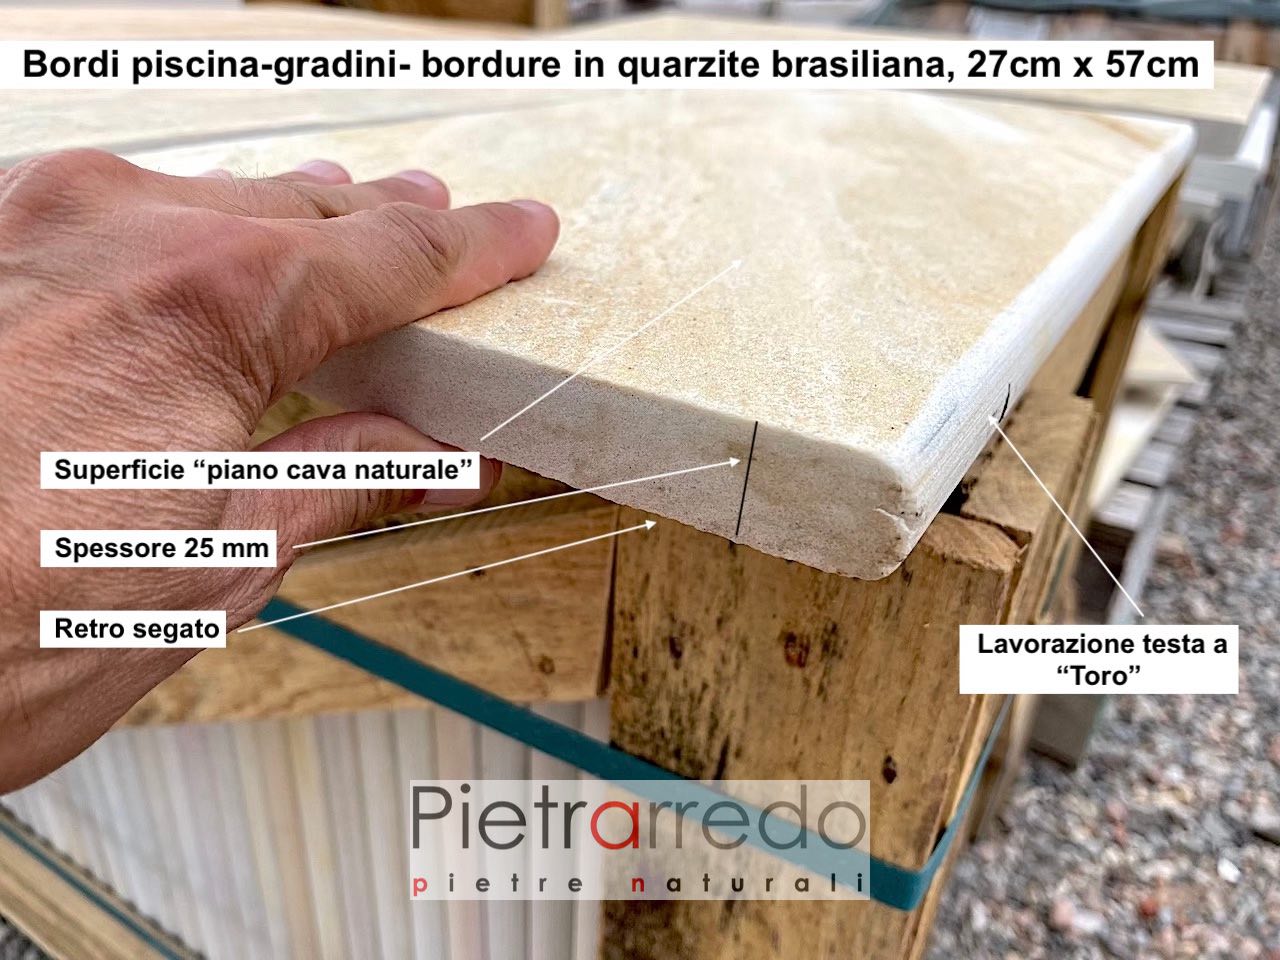 brazilian quartzite pool edges prices offers pietrarredo italia natural stones steps stairs